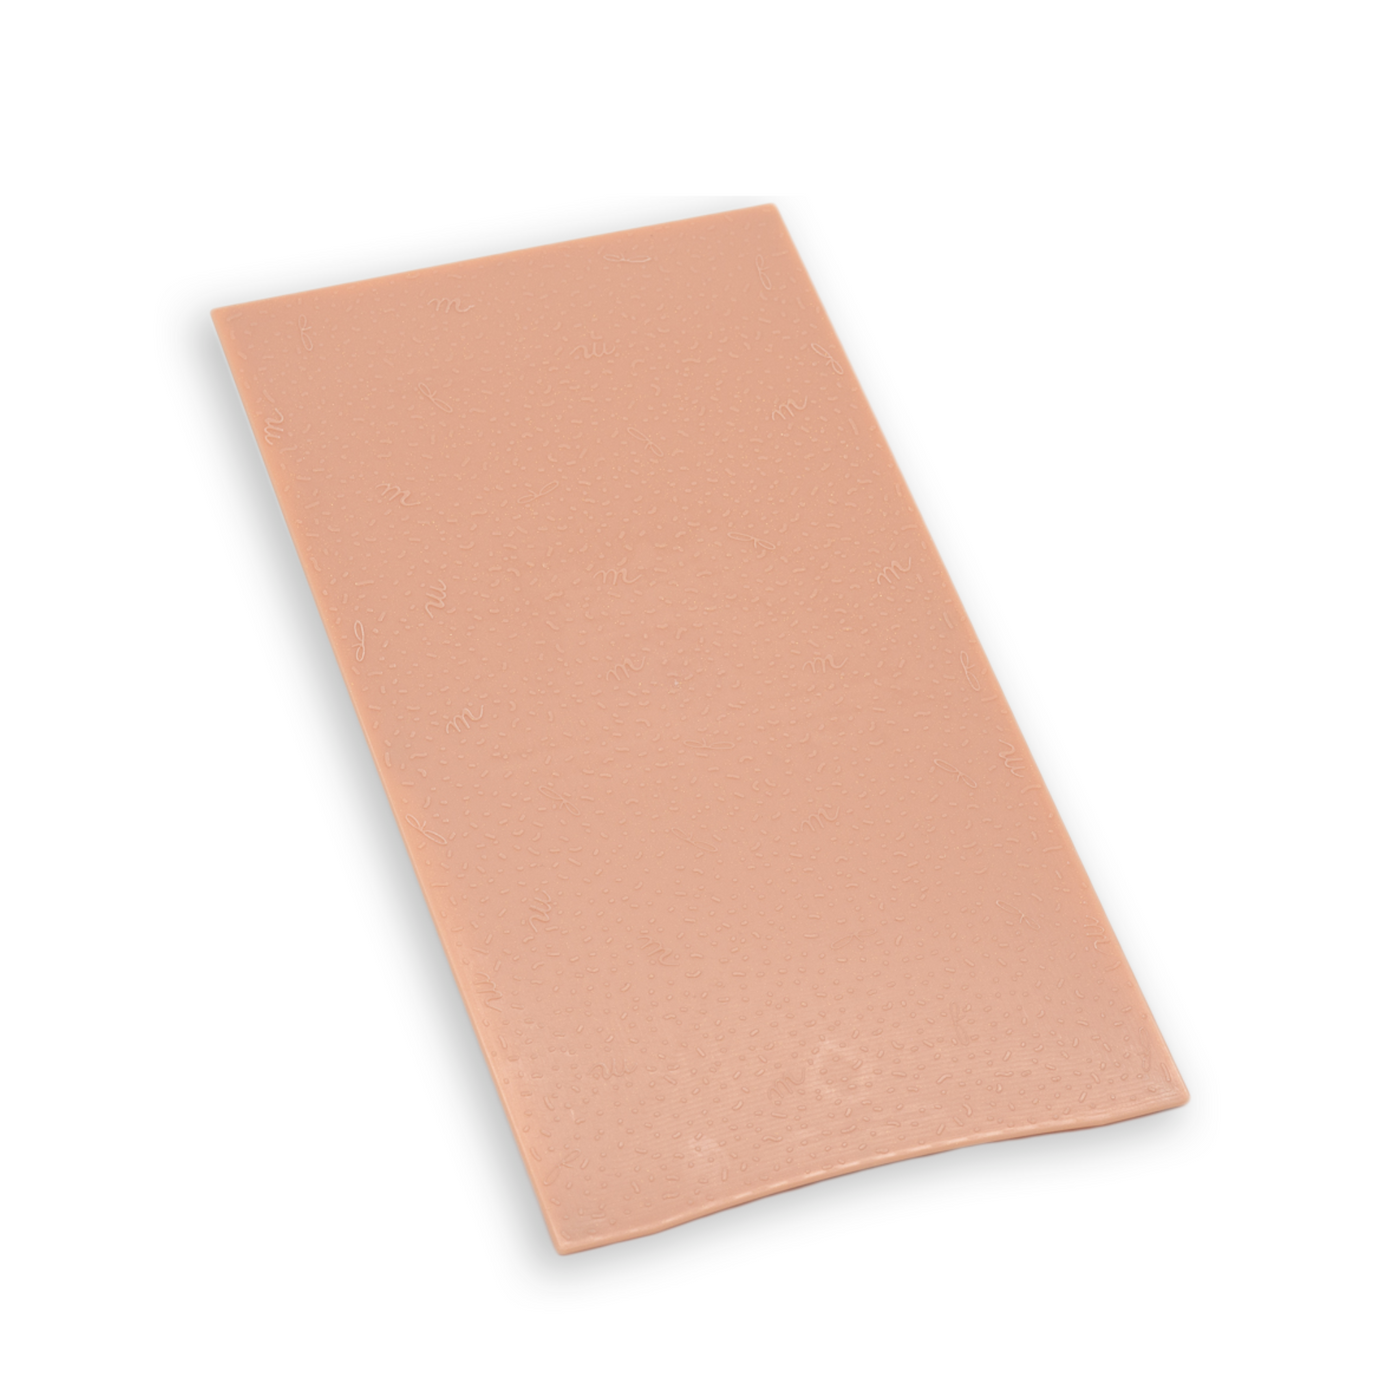 The Board - Dusty Pink (6.2" x 11.8")